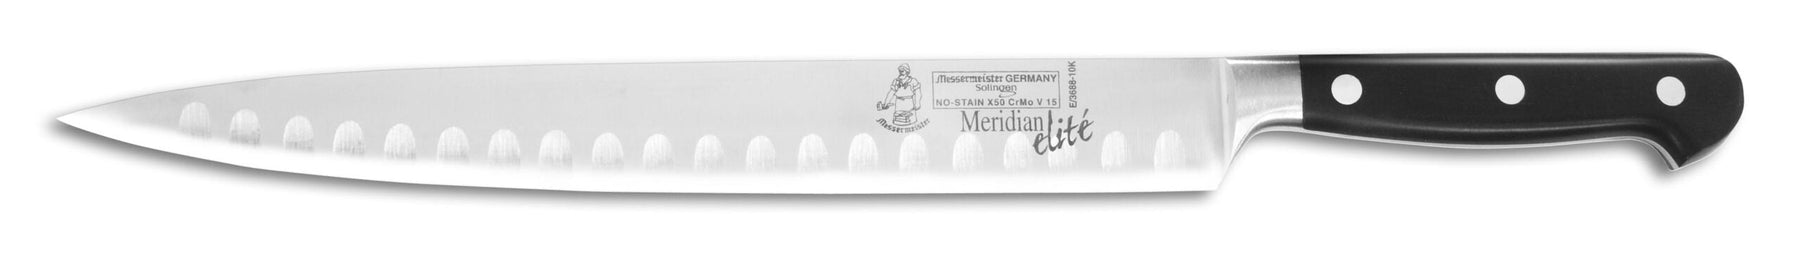 Meridian Elite Granton Slicer Knife - Bluecashew -bluecashew kitchen homestead